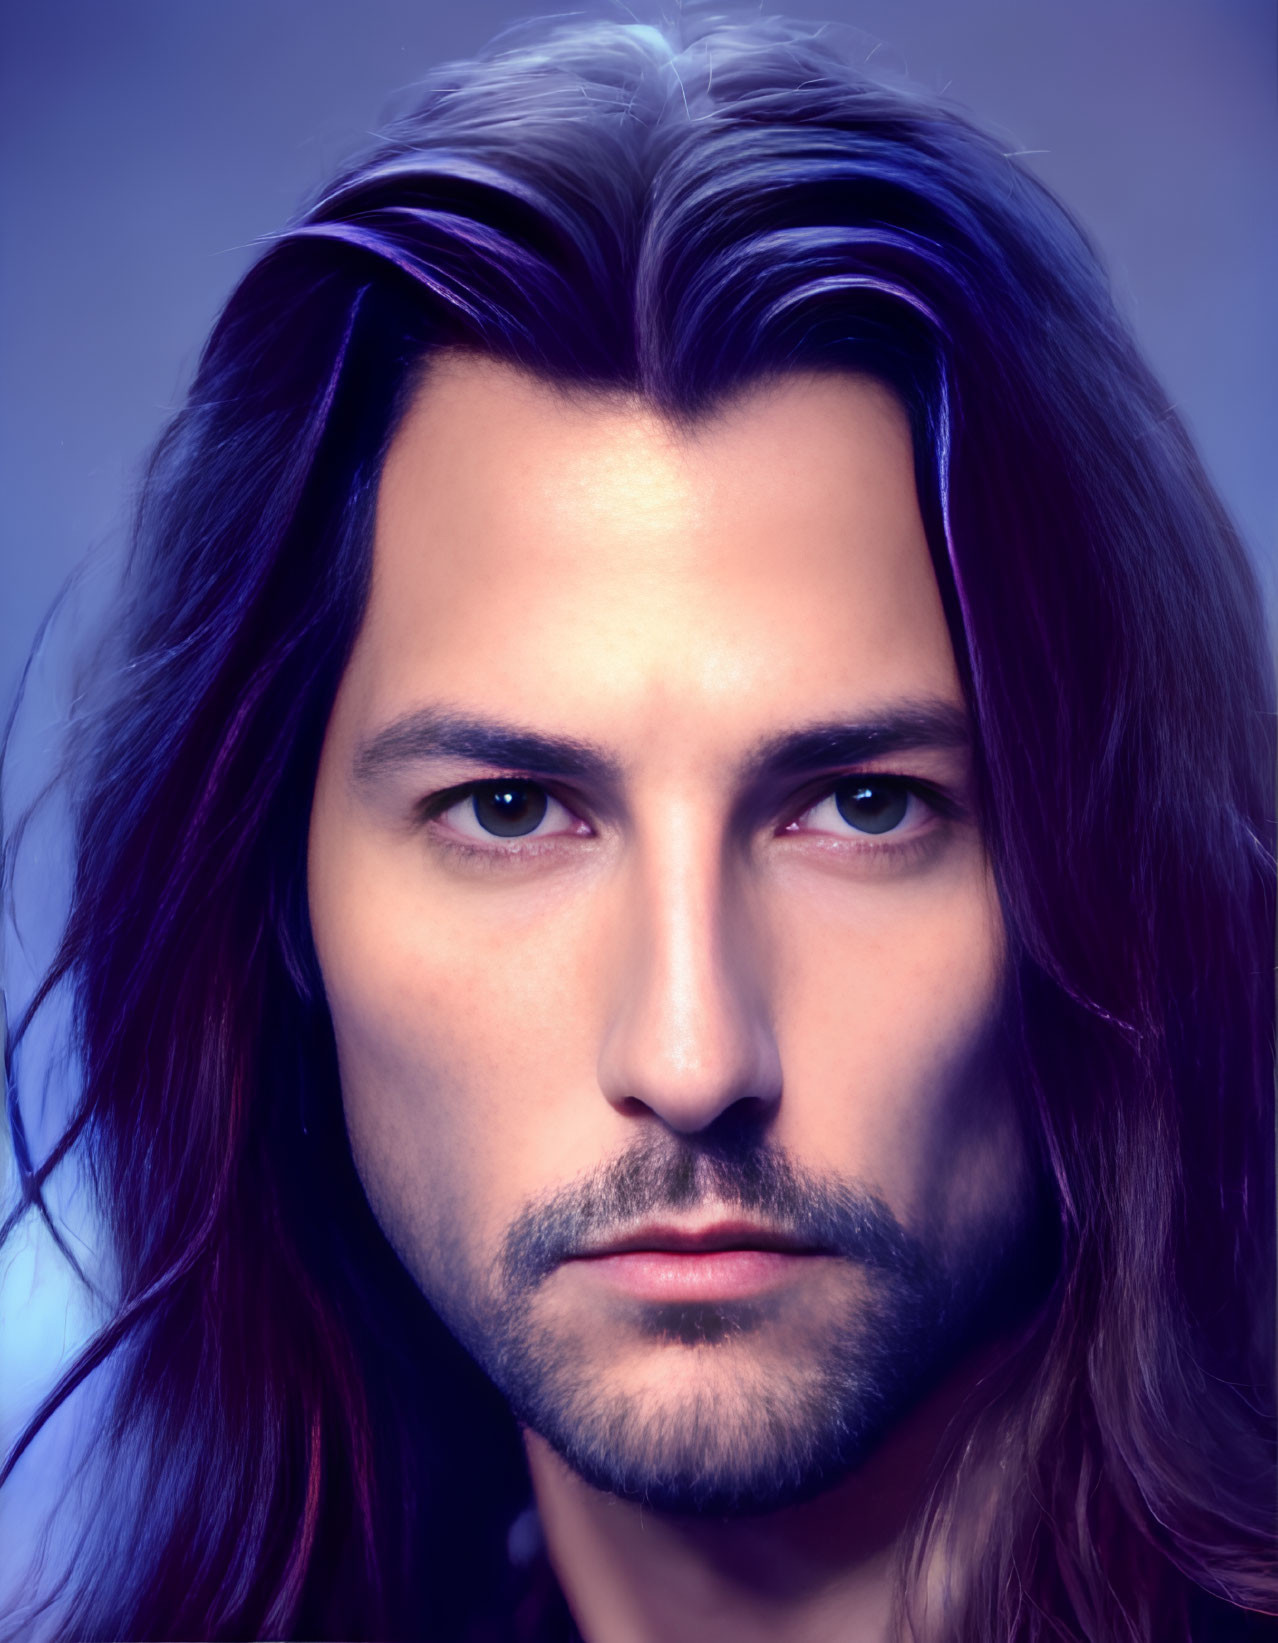 Portrait of man with medium-length dark hair, slight beard, intense eyes on violet gradient.